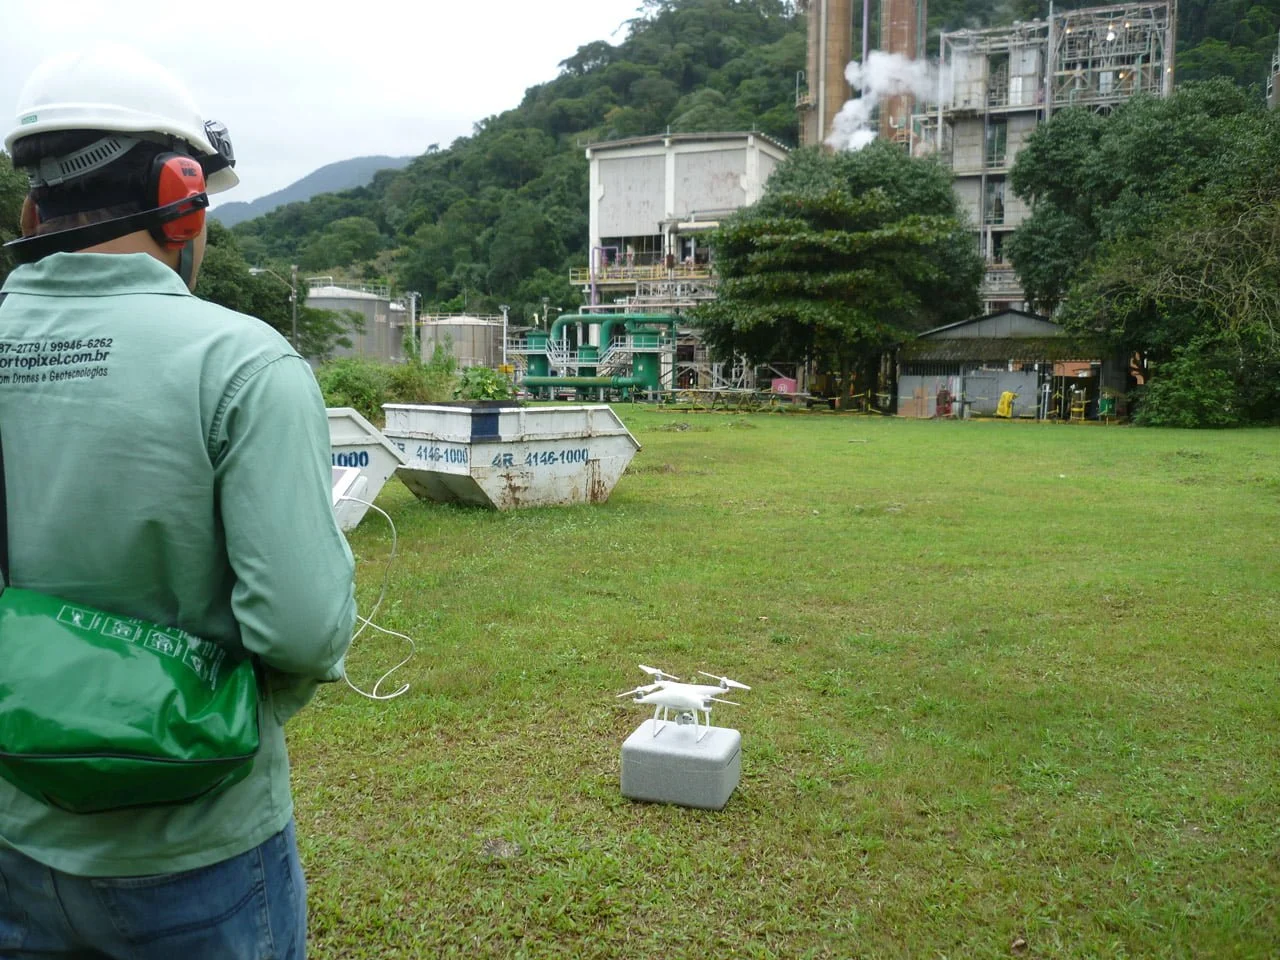 Operador de drones da Ortopixel prestes a utilizar drone para aerofotogrametria